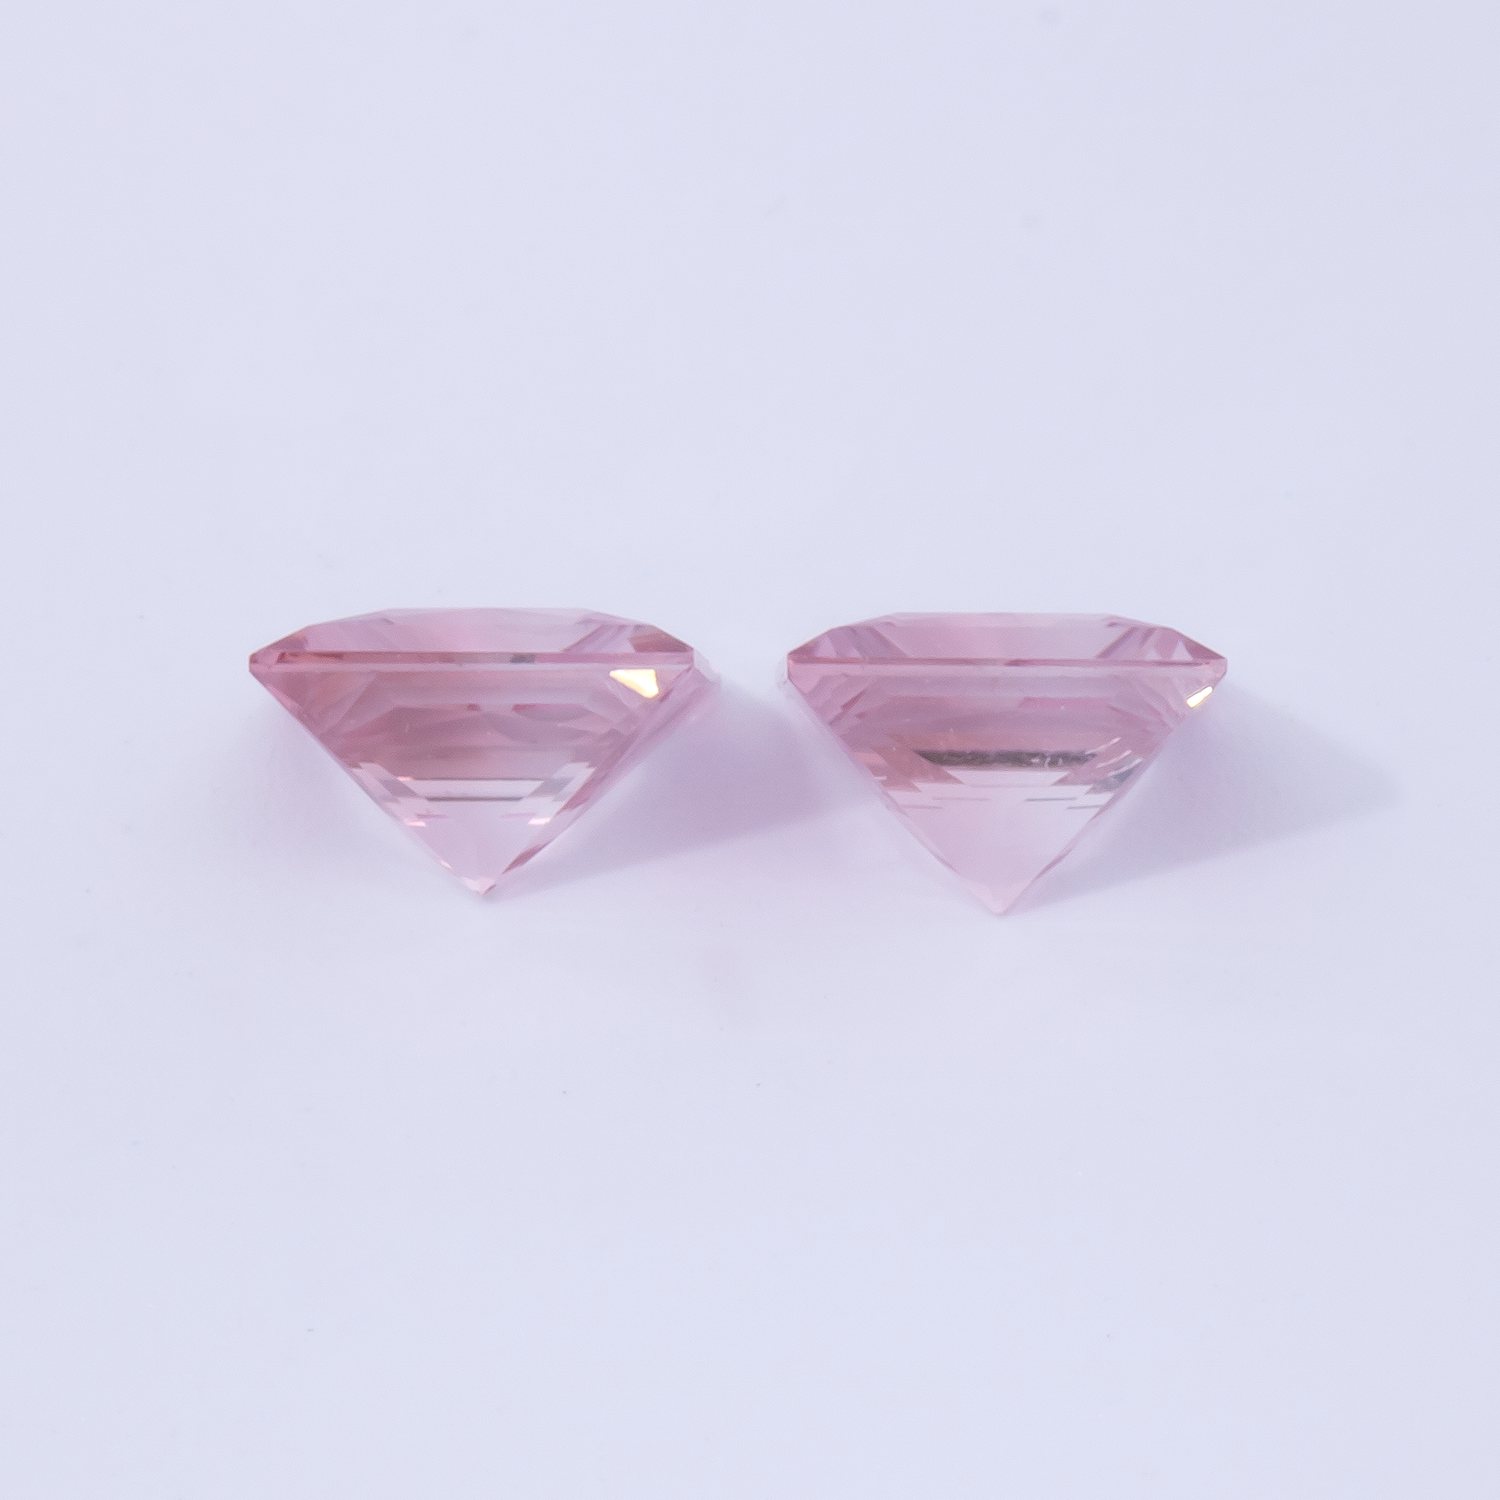 Turmalin Paar - rosa, rechteck, 5x5 mm, 1.09 cts, Nr. TR991074